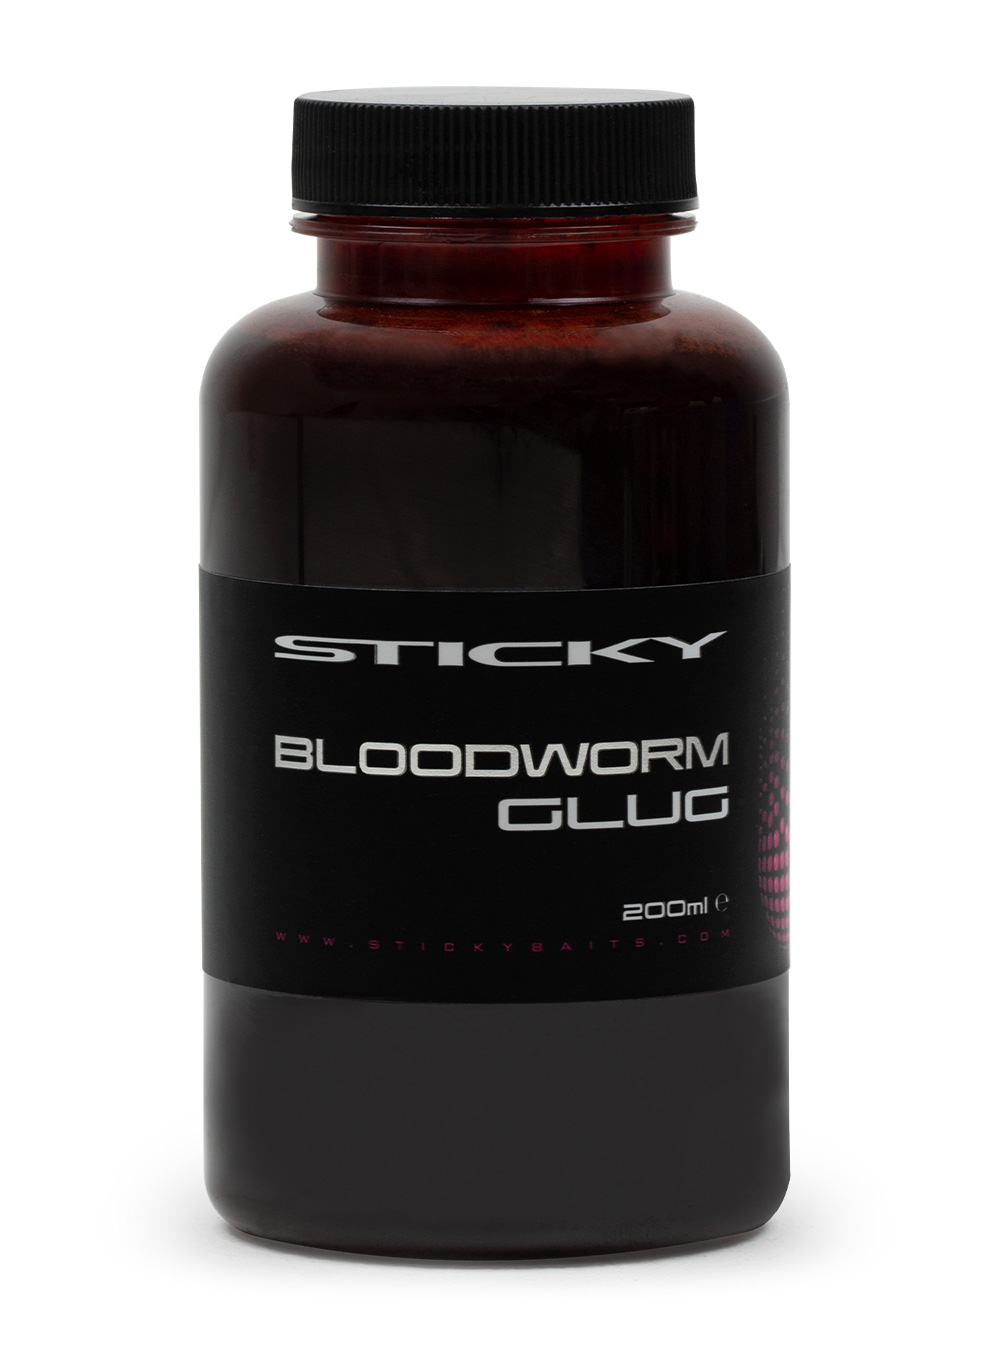 Sticky Baits - Products - Bloodworm Glug - Carp Fishing Bait